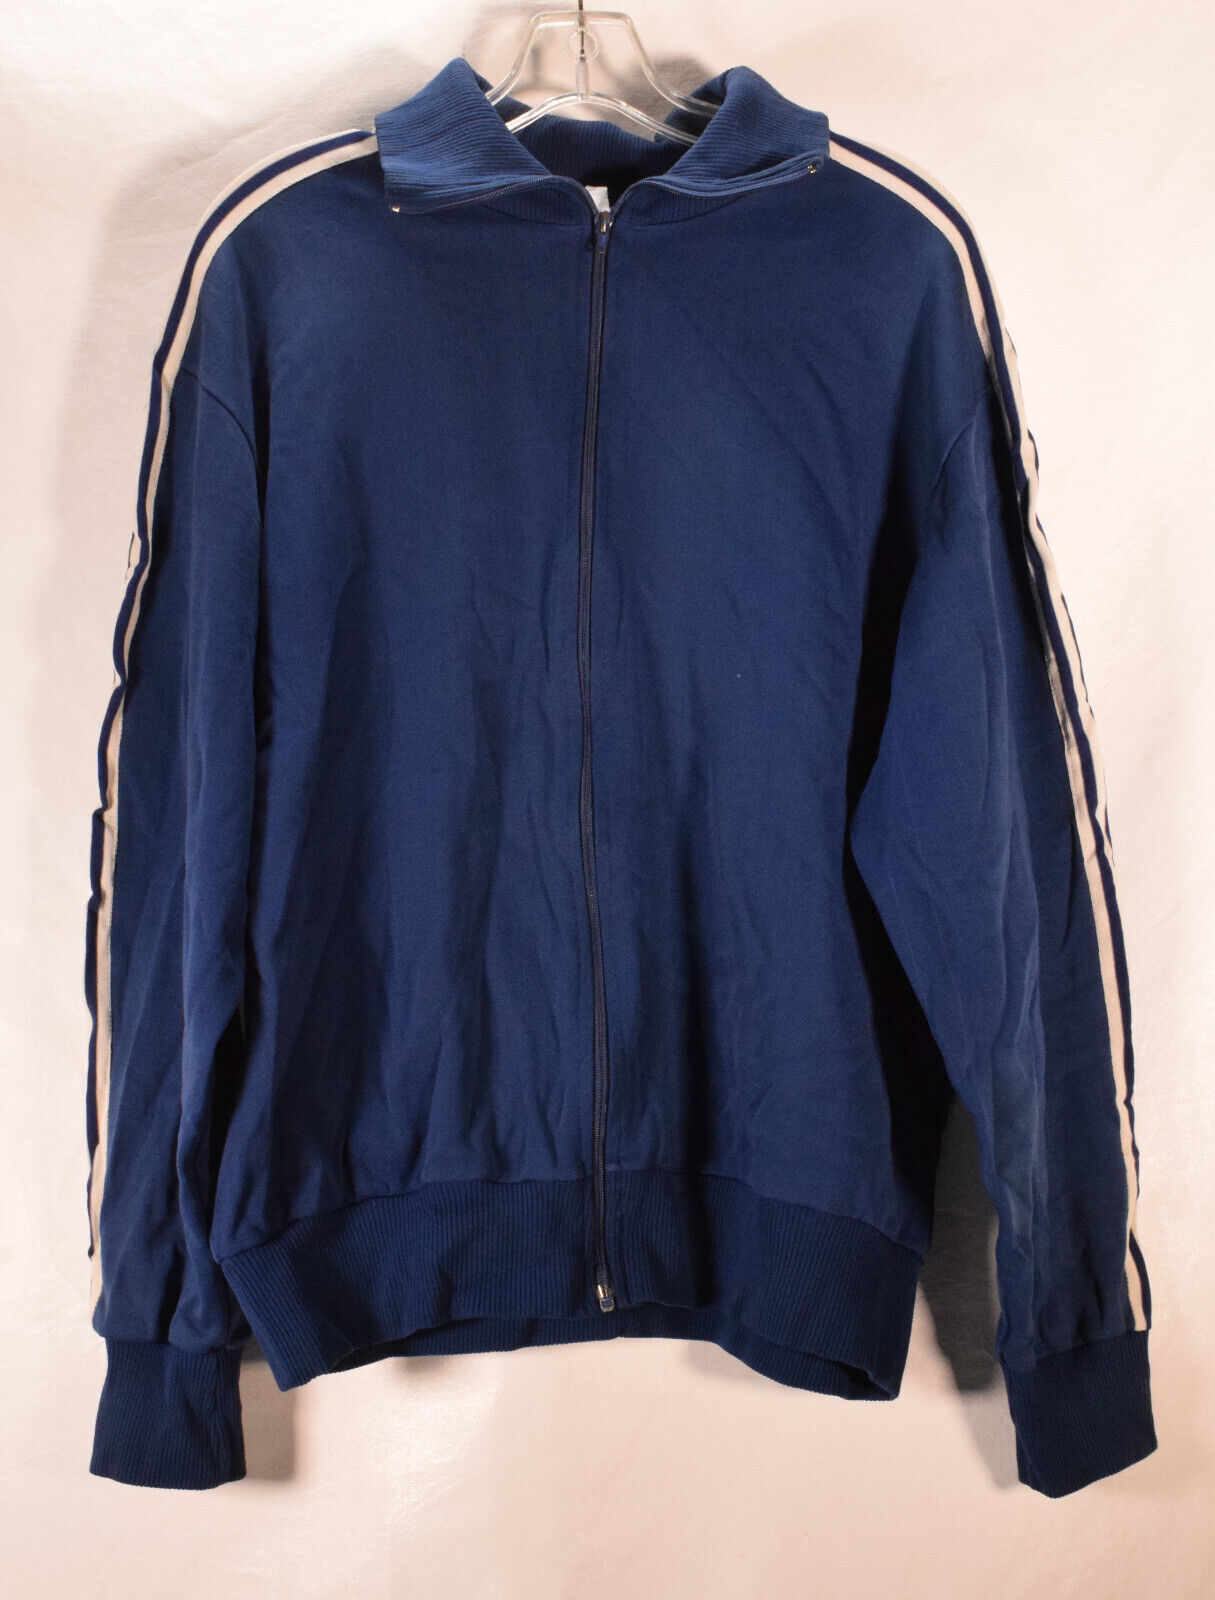 Primary image for Adidas Vintage Mens Striped Track Jacket Blue